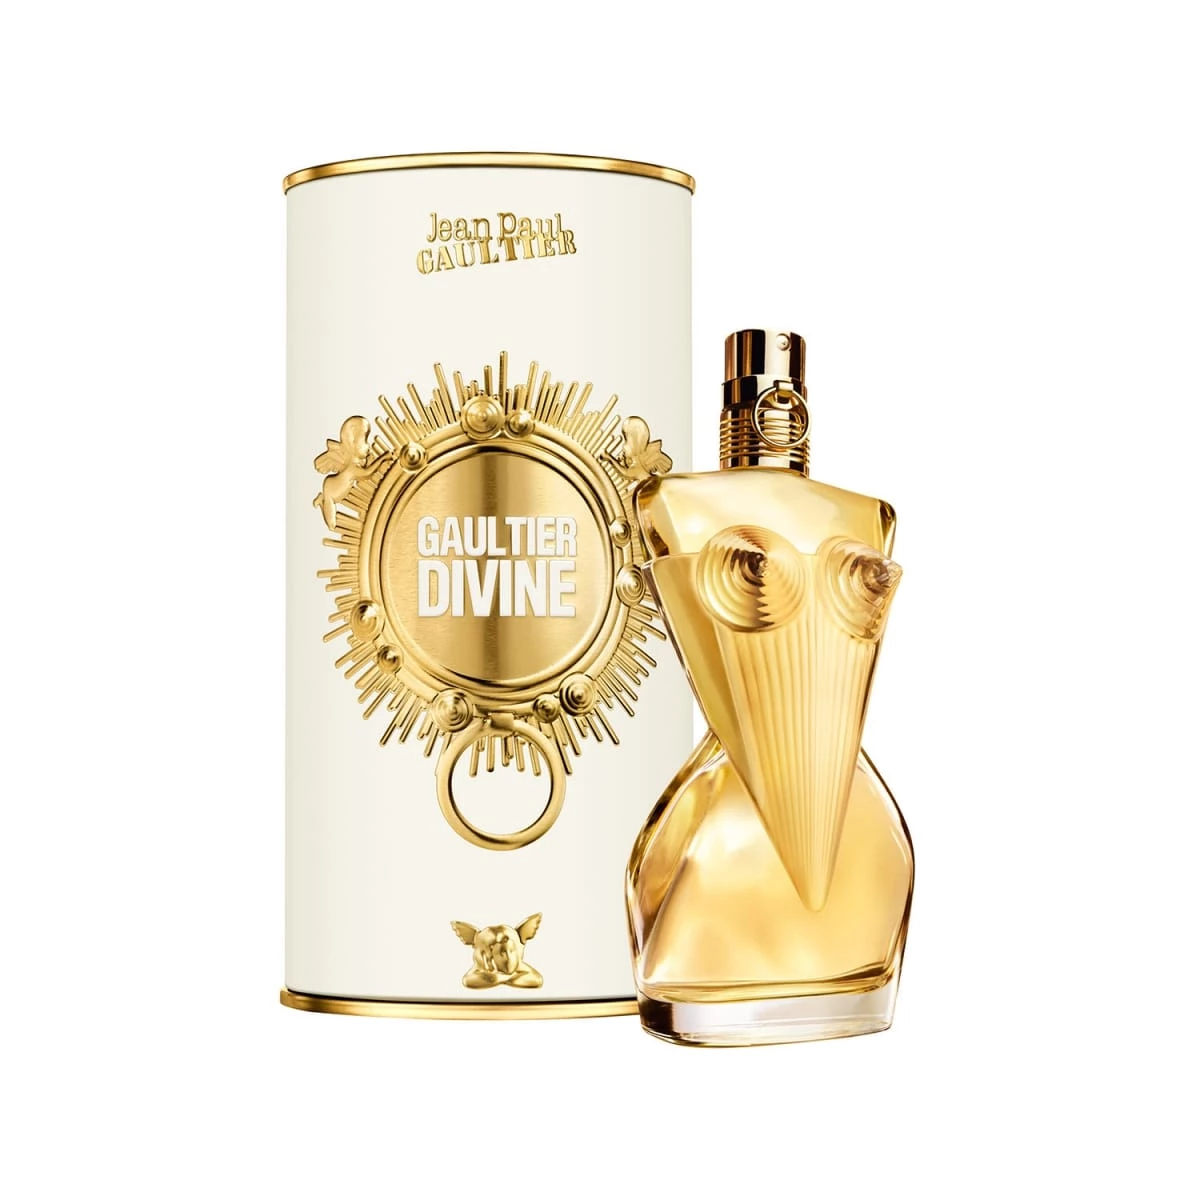 Gaultier Divine de Jean Paul Gaultier - Eau de Parfum - Incenza